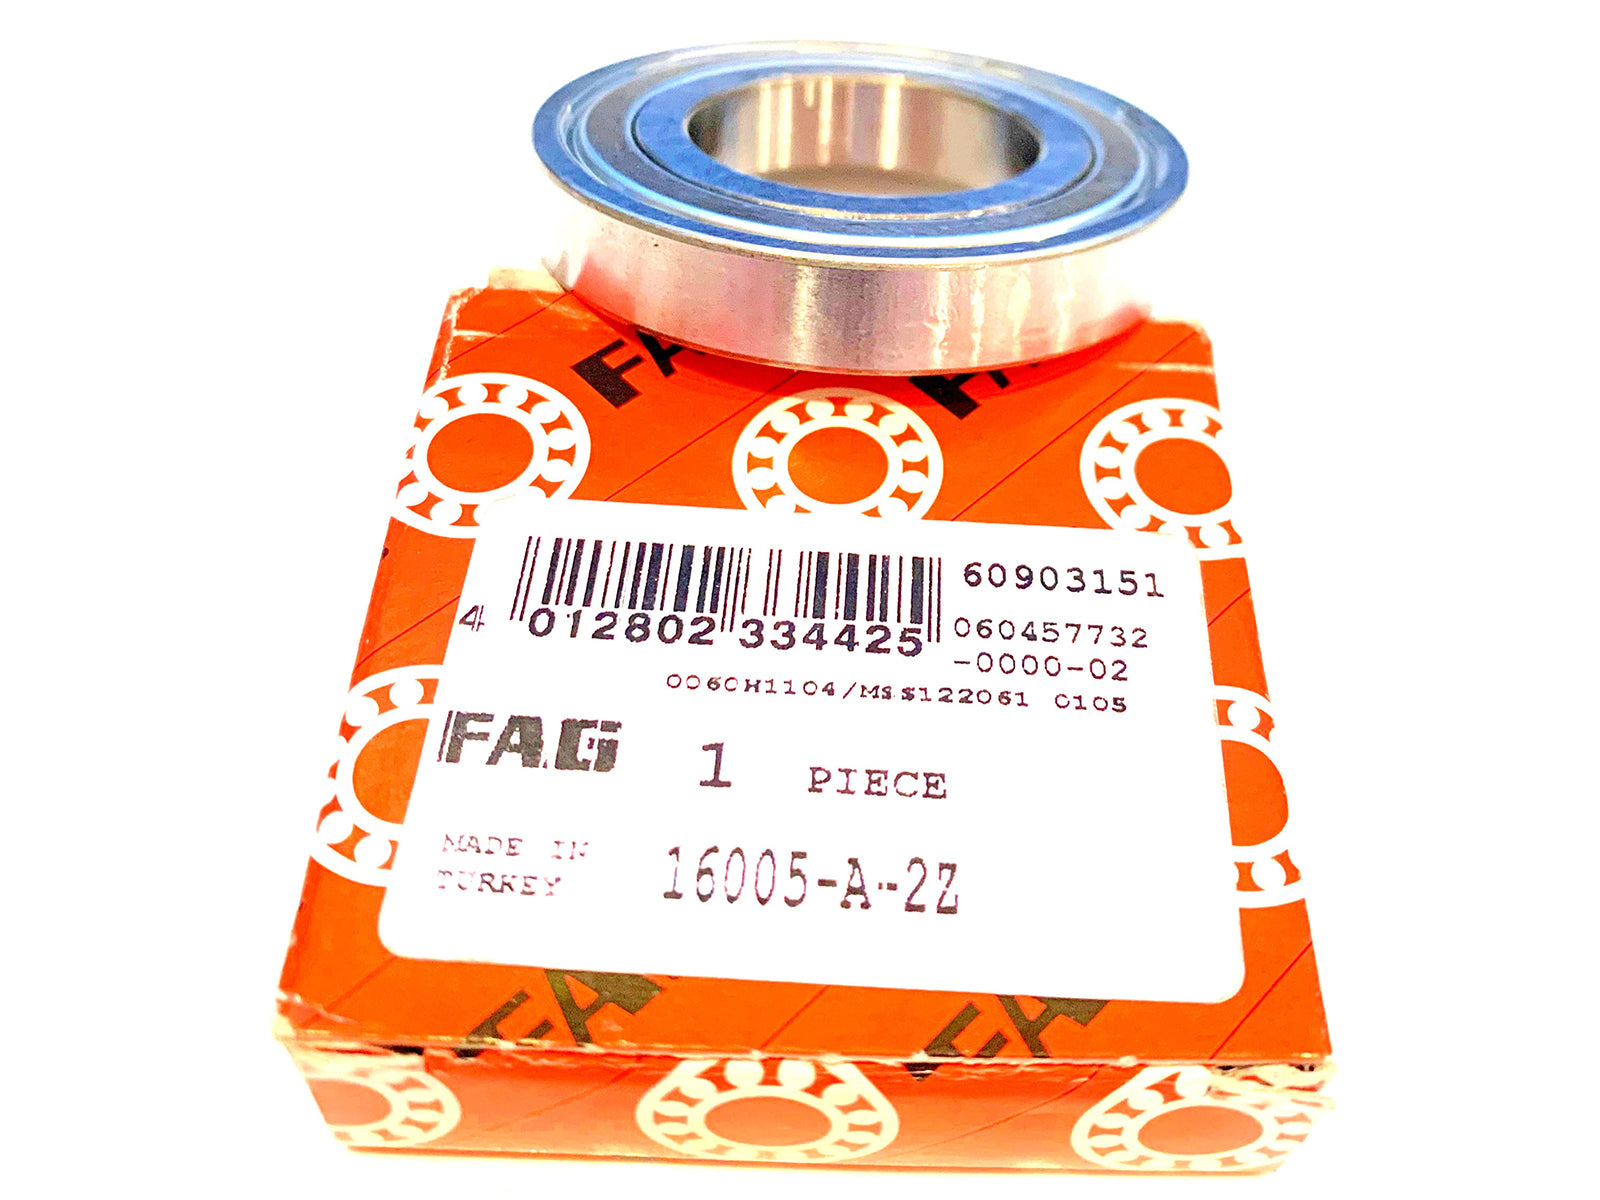 FAG Ball Bearing 16005-A-2Z - ppdistributors